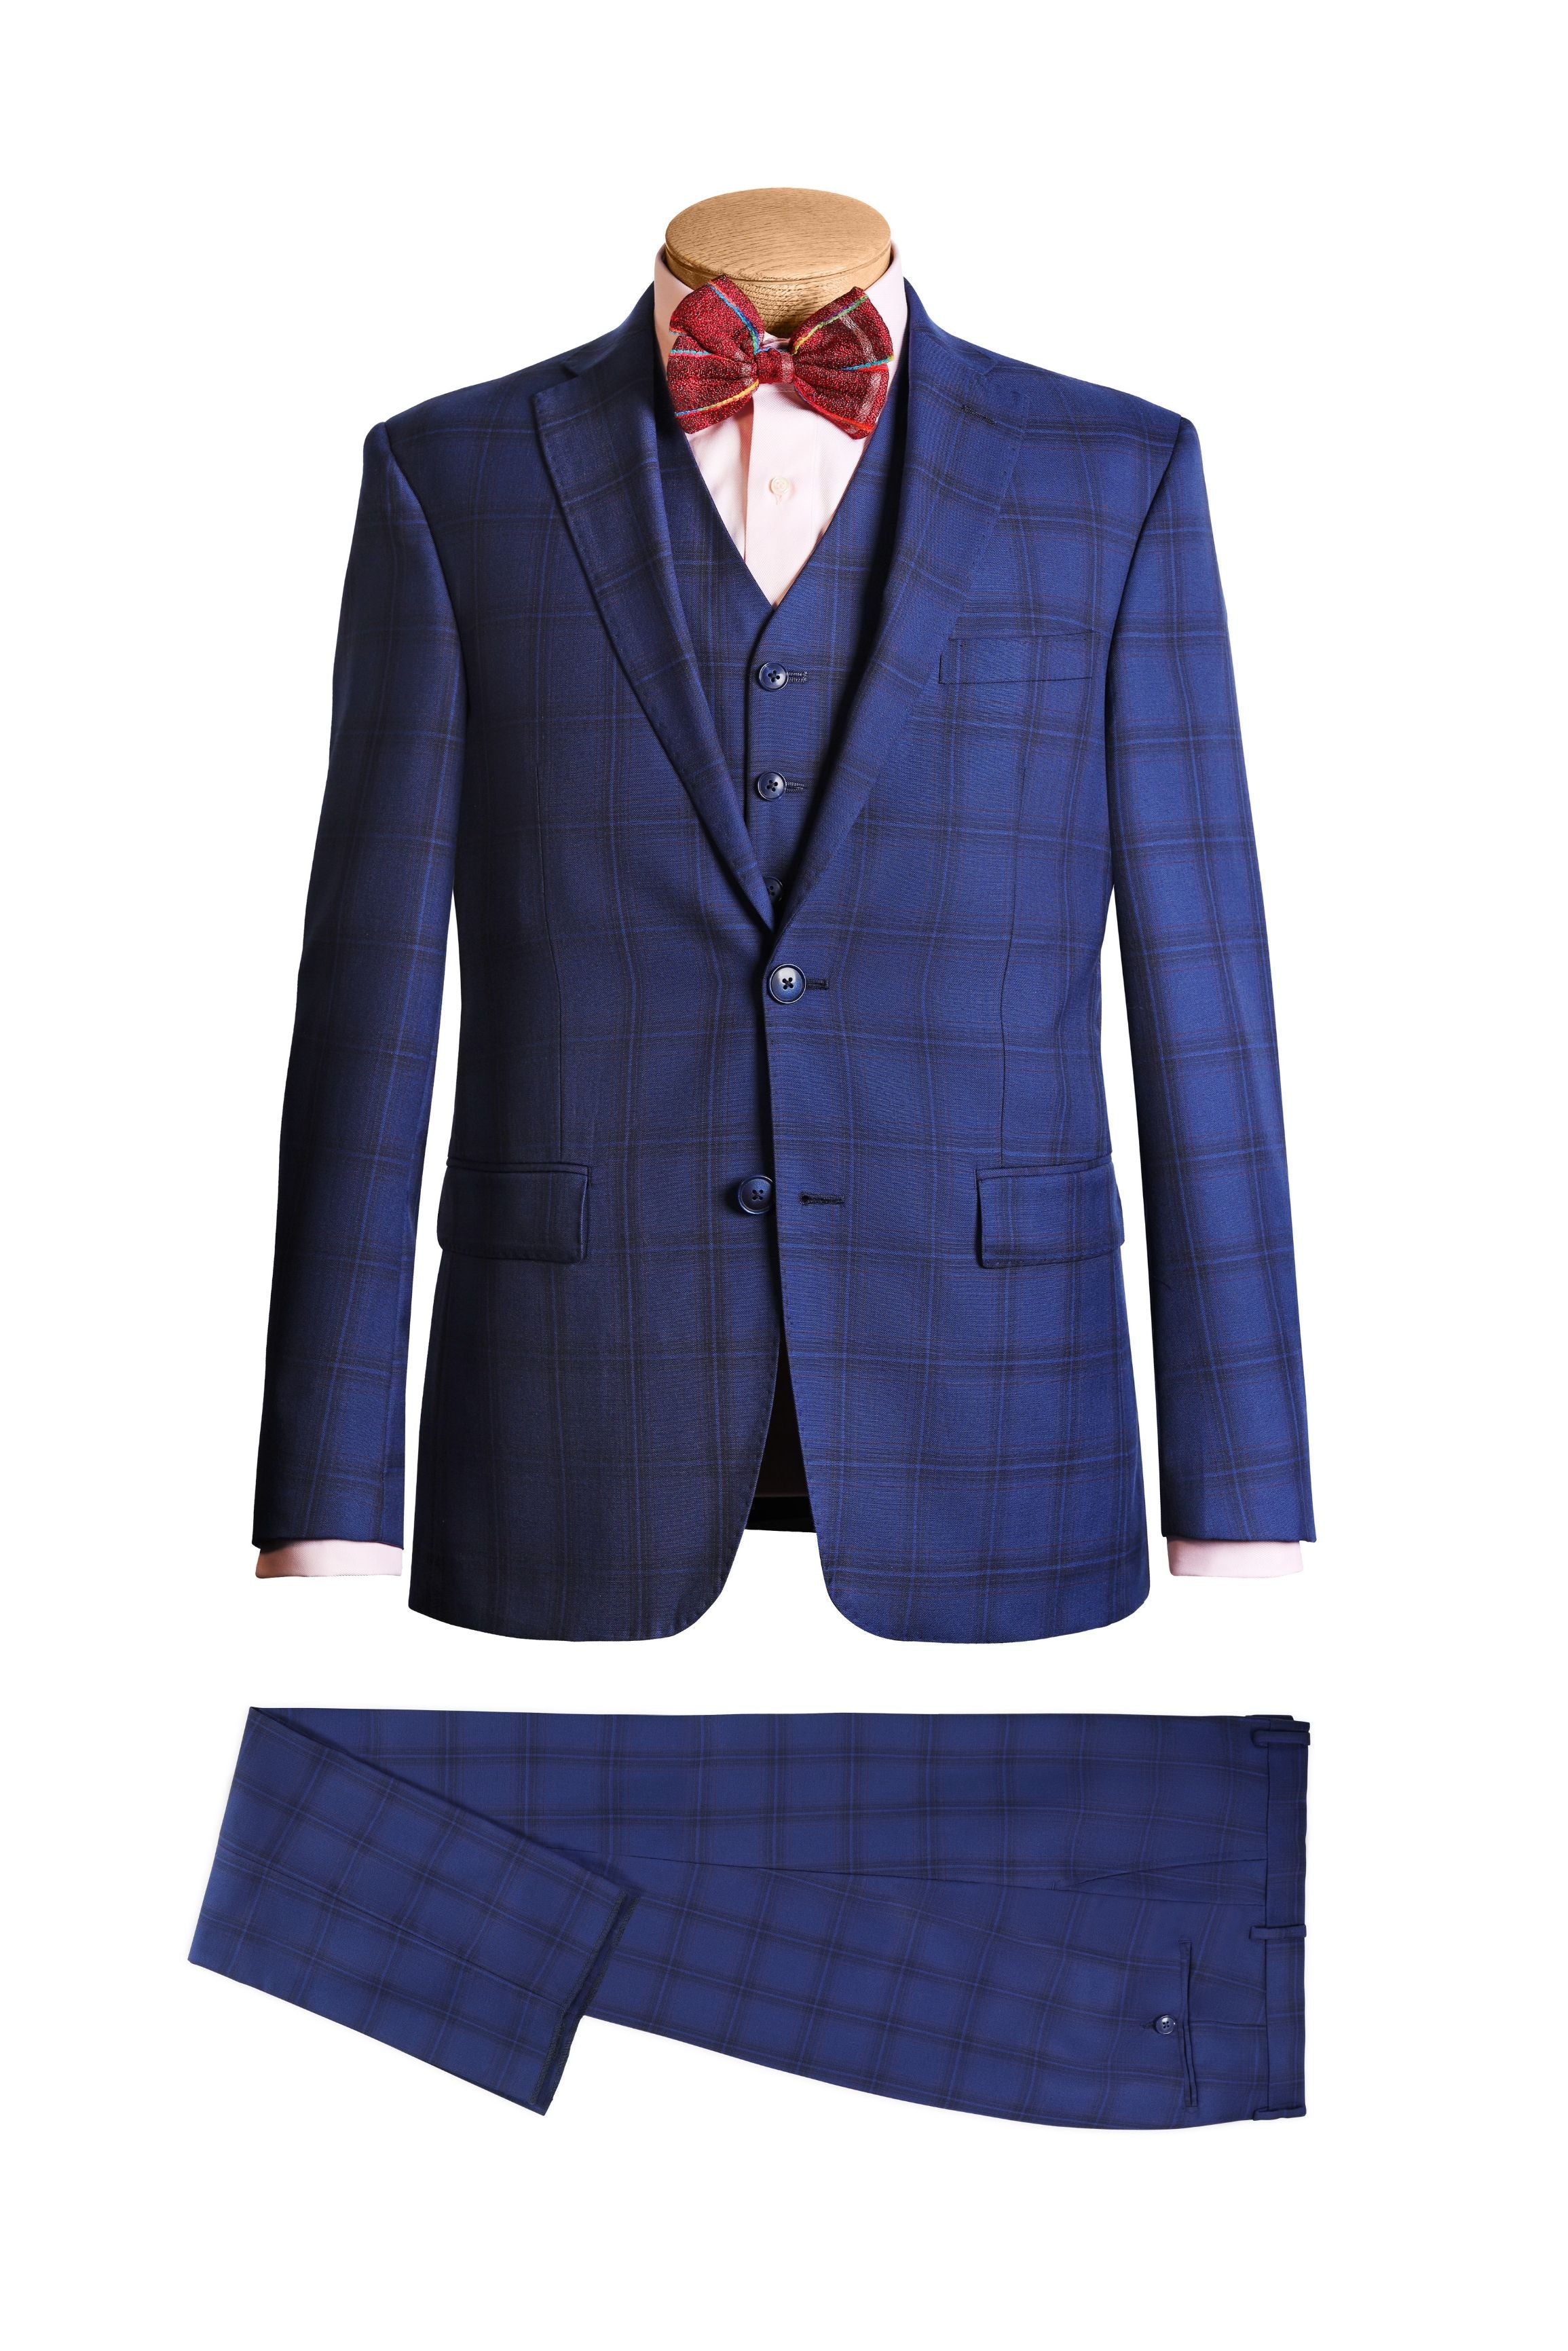 Lazarou Blue Navy 3 Piece Suit - Mastroianni Fashions